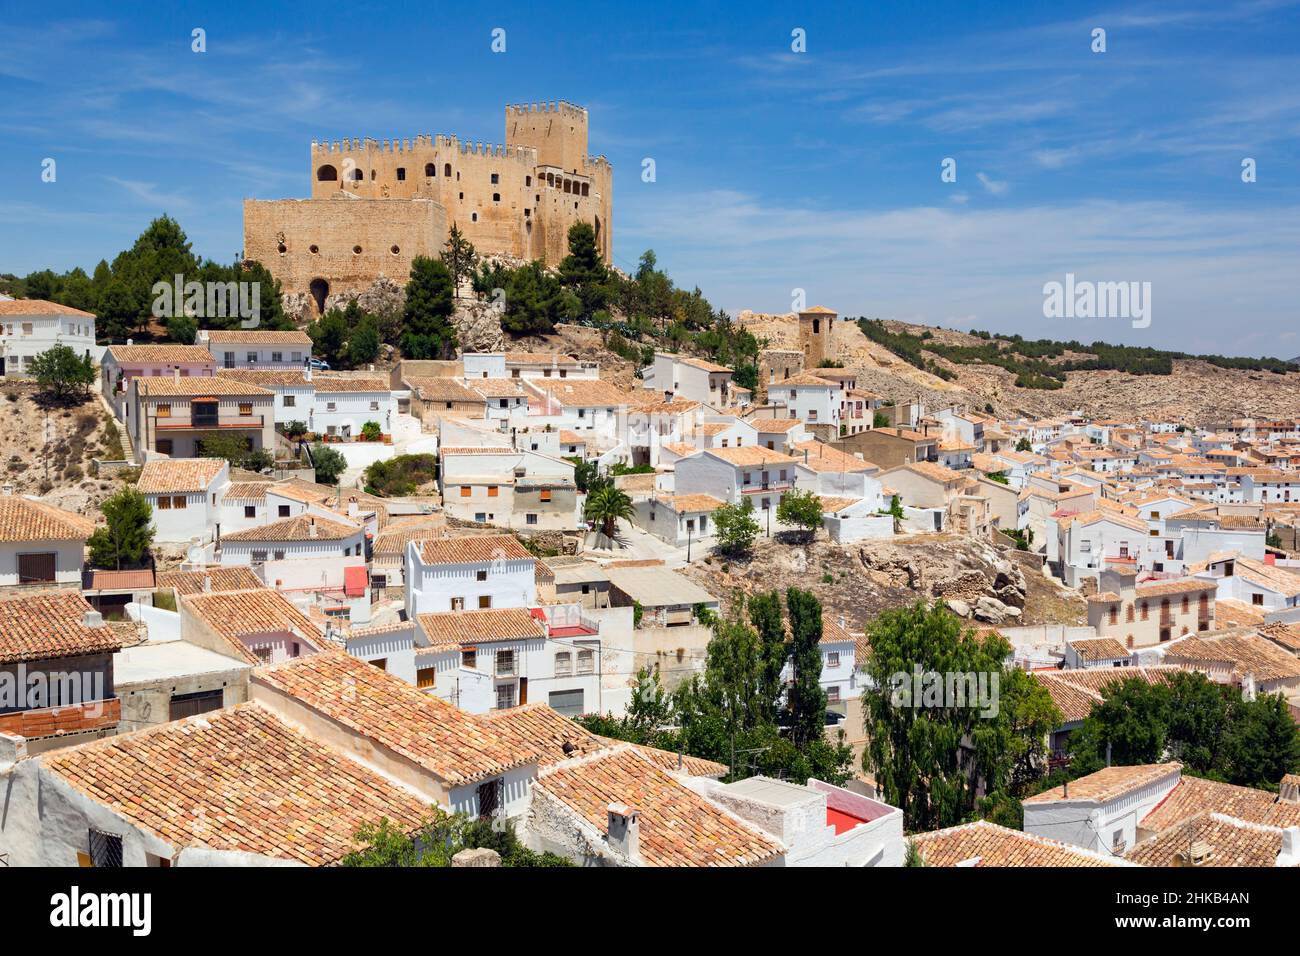 Velez-Blanco, Almeria Province, Andalusia, southern Spain. 16th century Castillo de los Farjado, Castle of the Farjado, seen across the town. Stock Photo